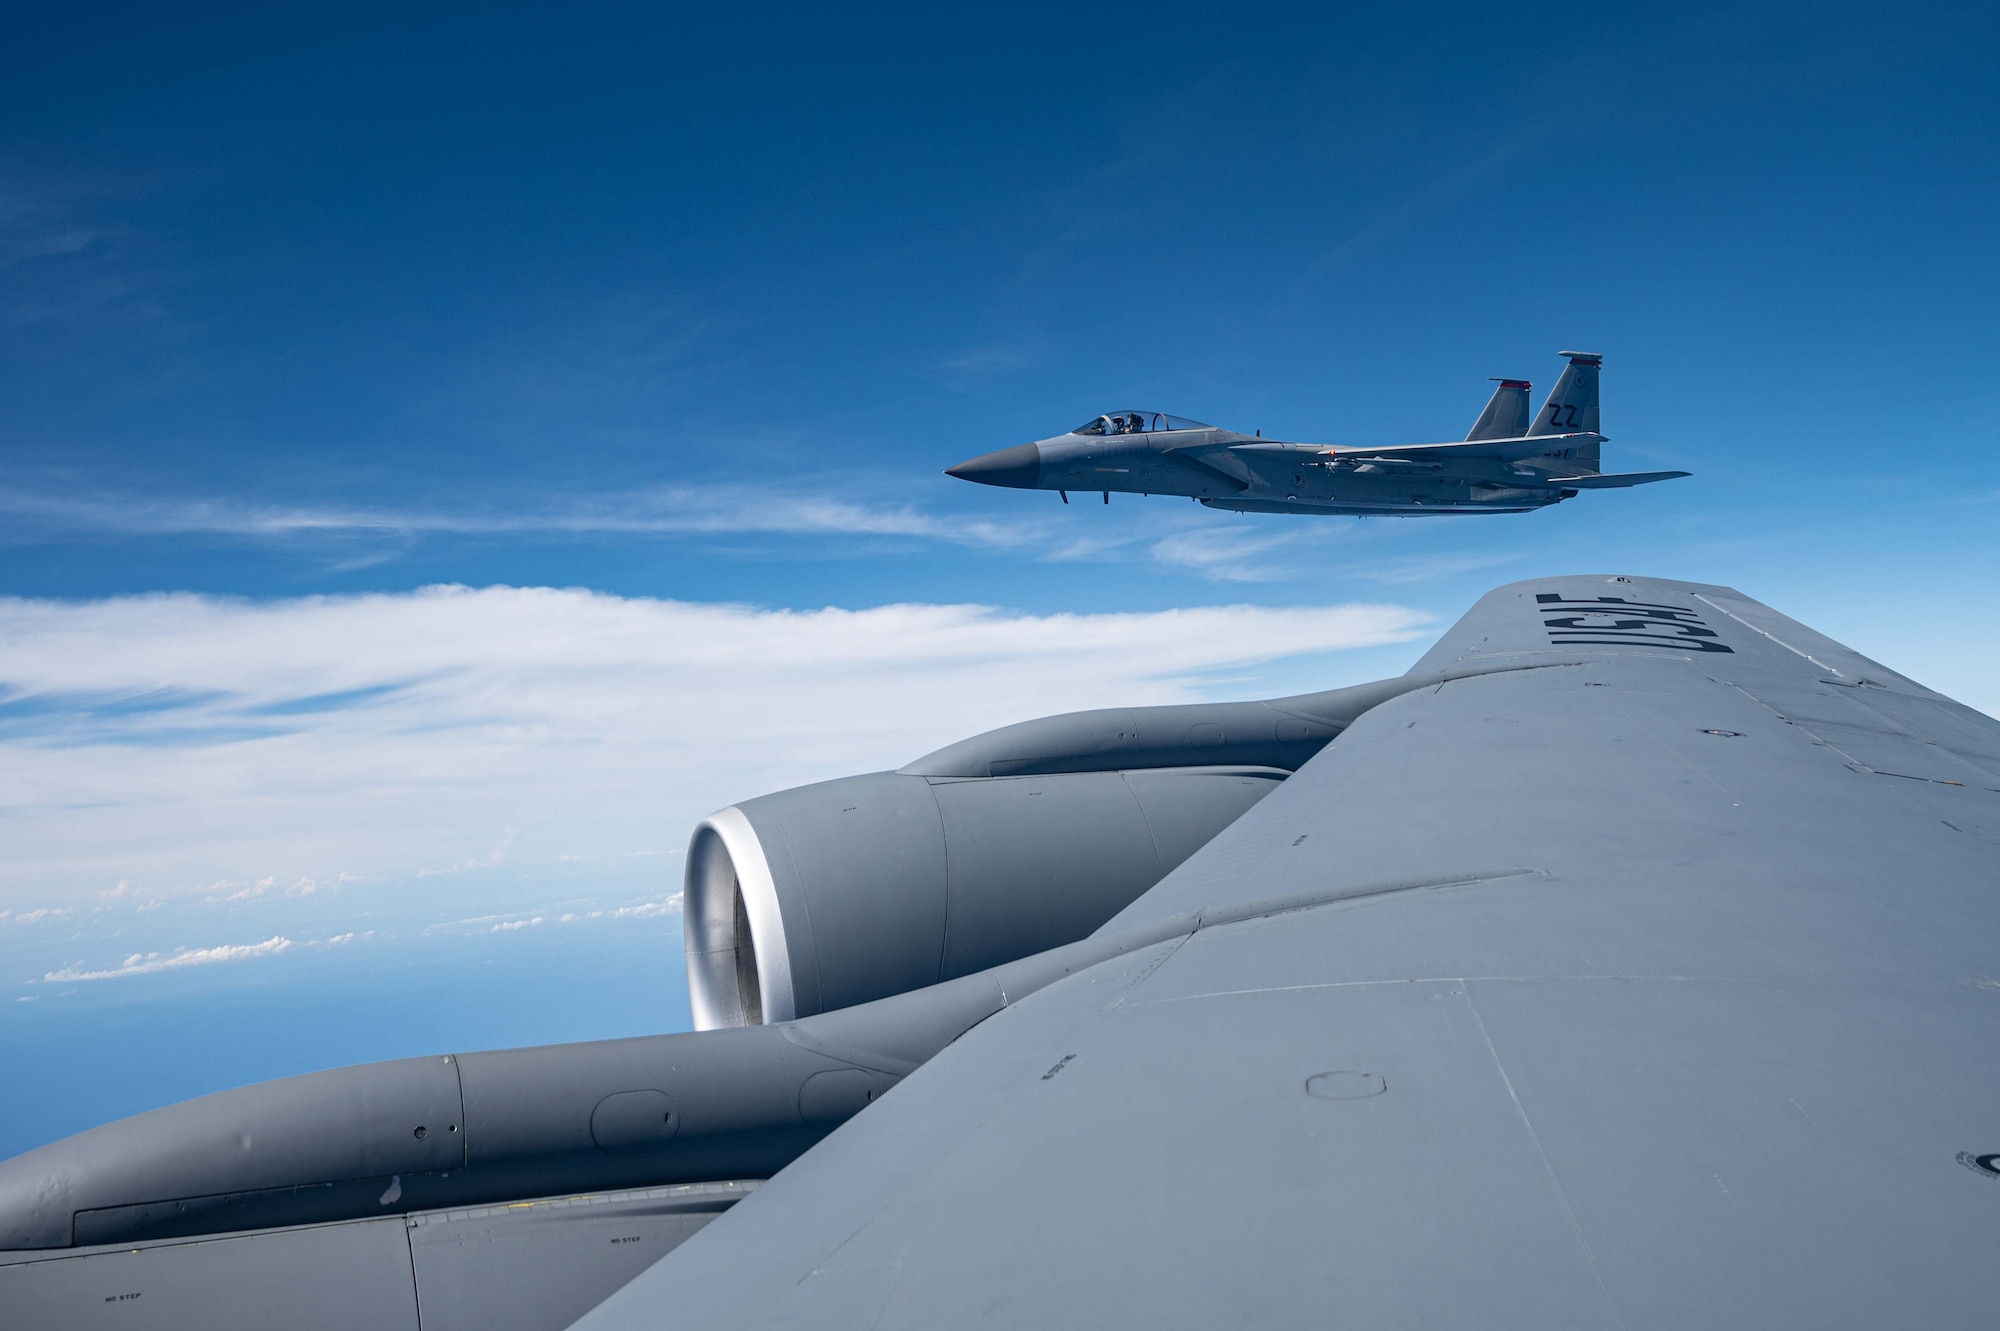 One F-15 flies next to a KC-135